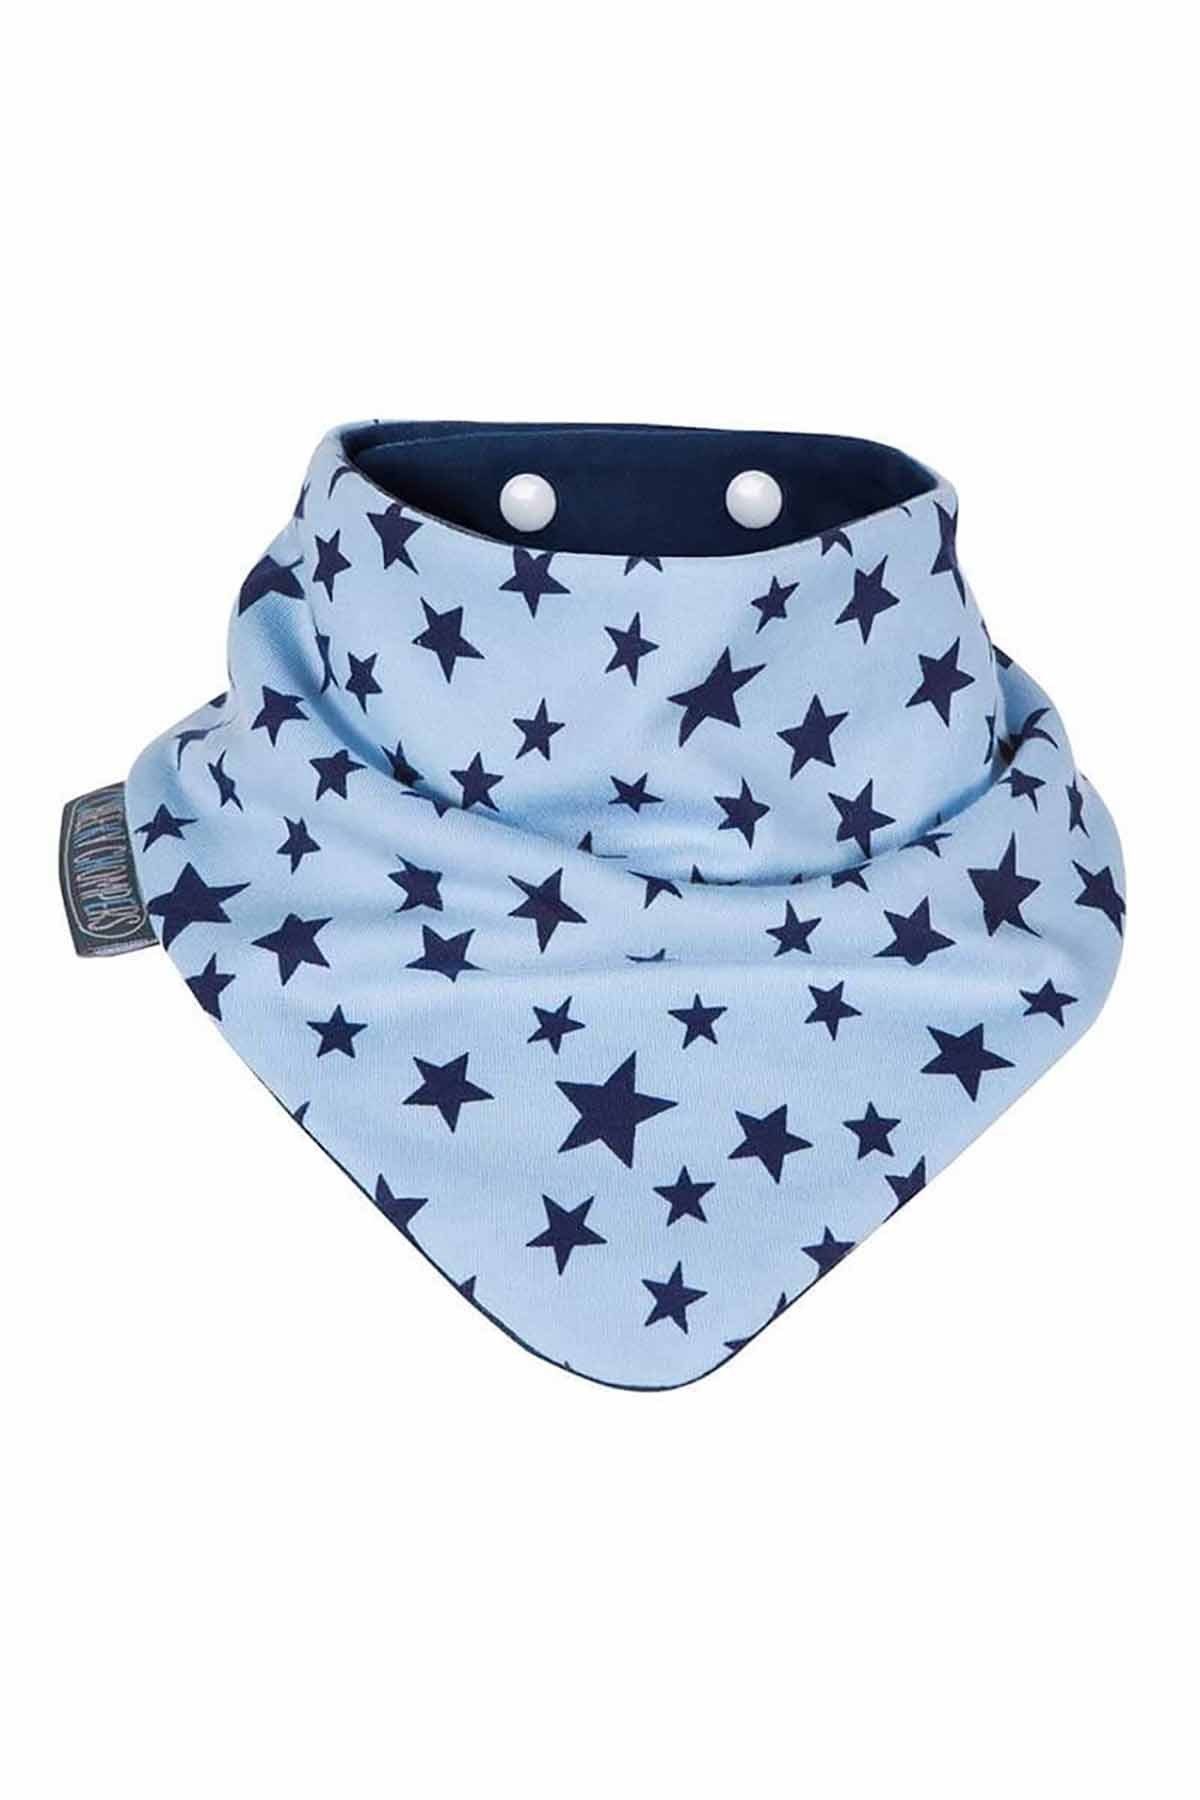 Cheeky Chompers İkili Önlük Blue Stars & Stripes